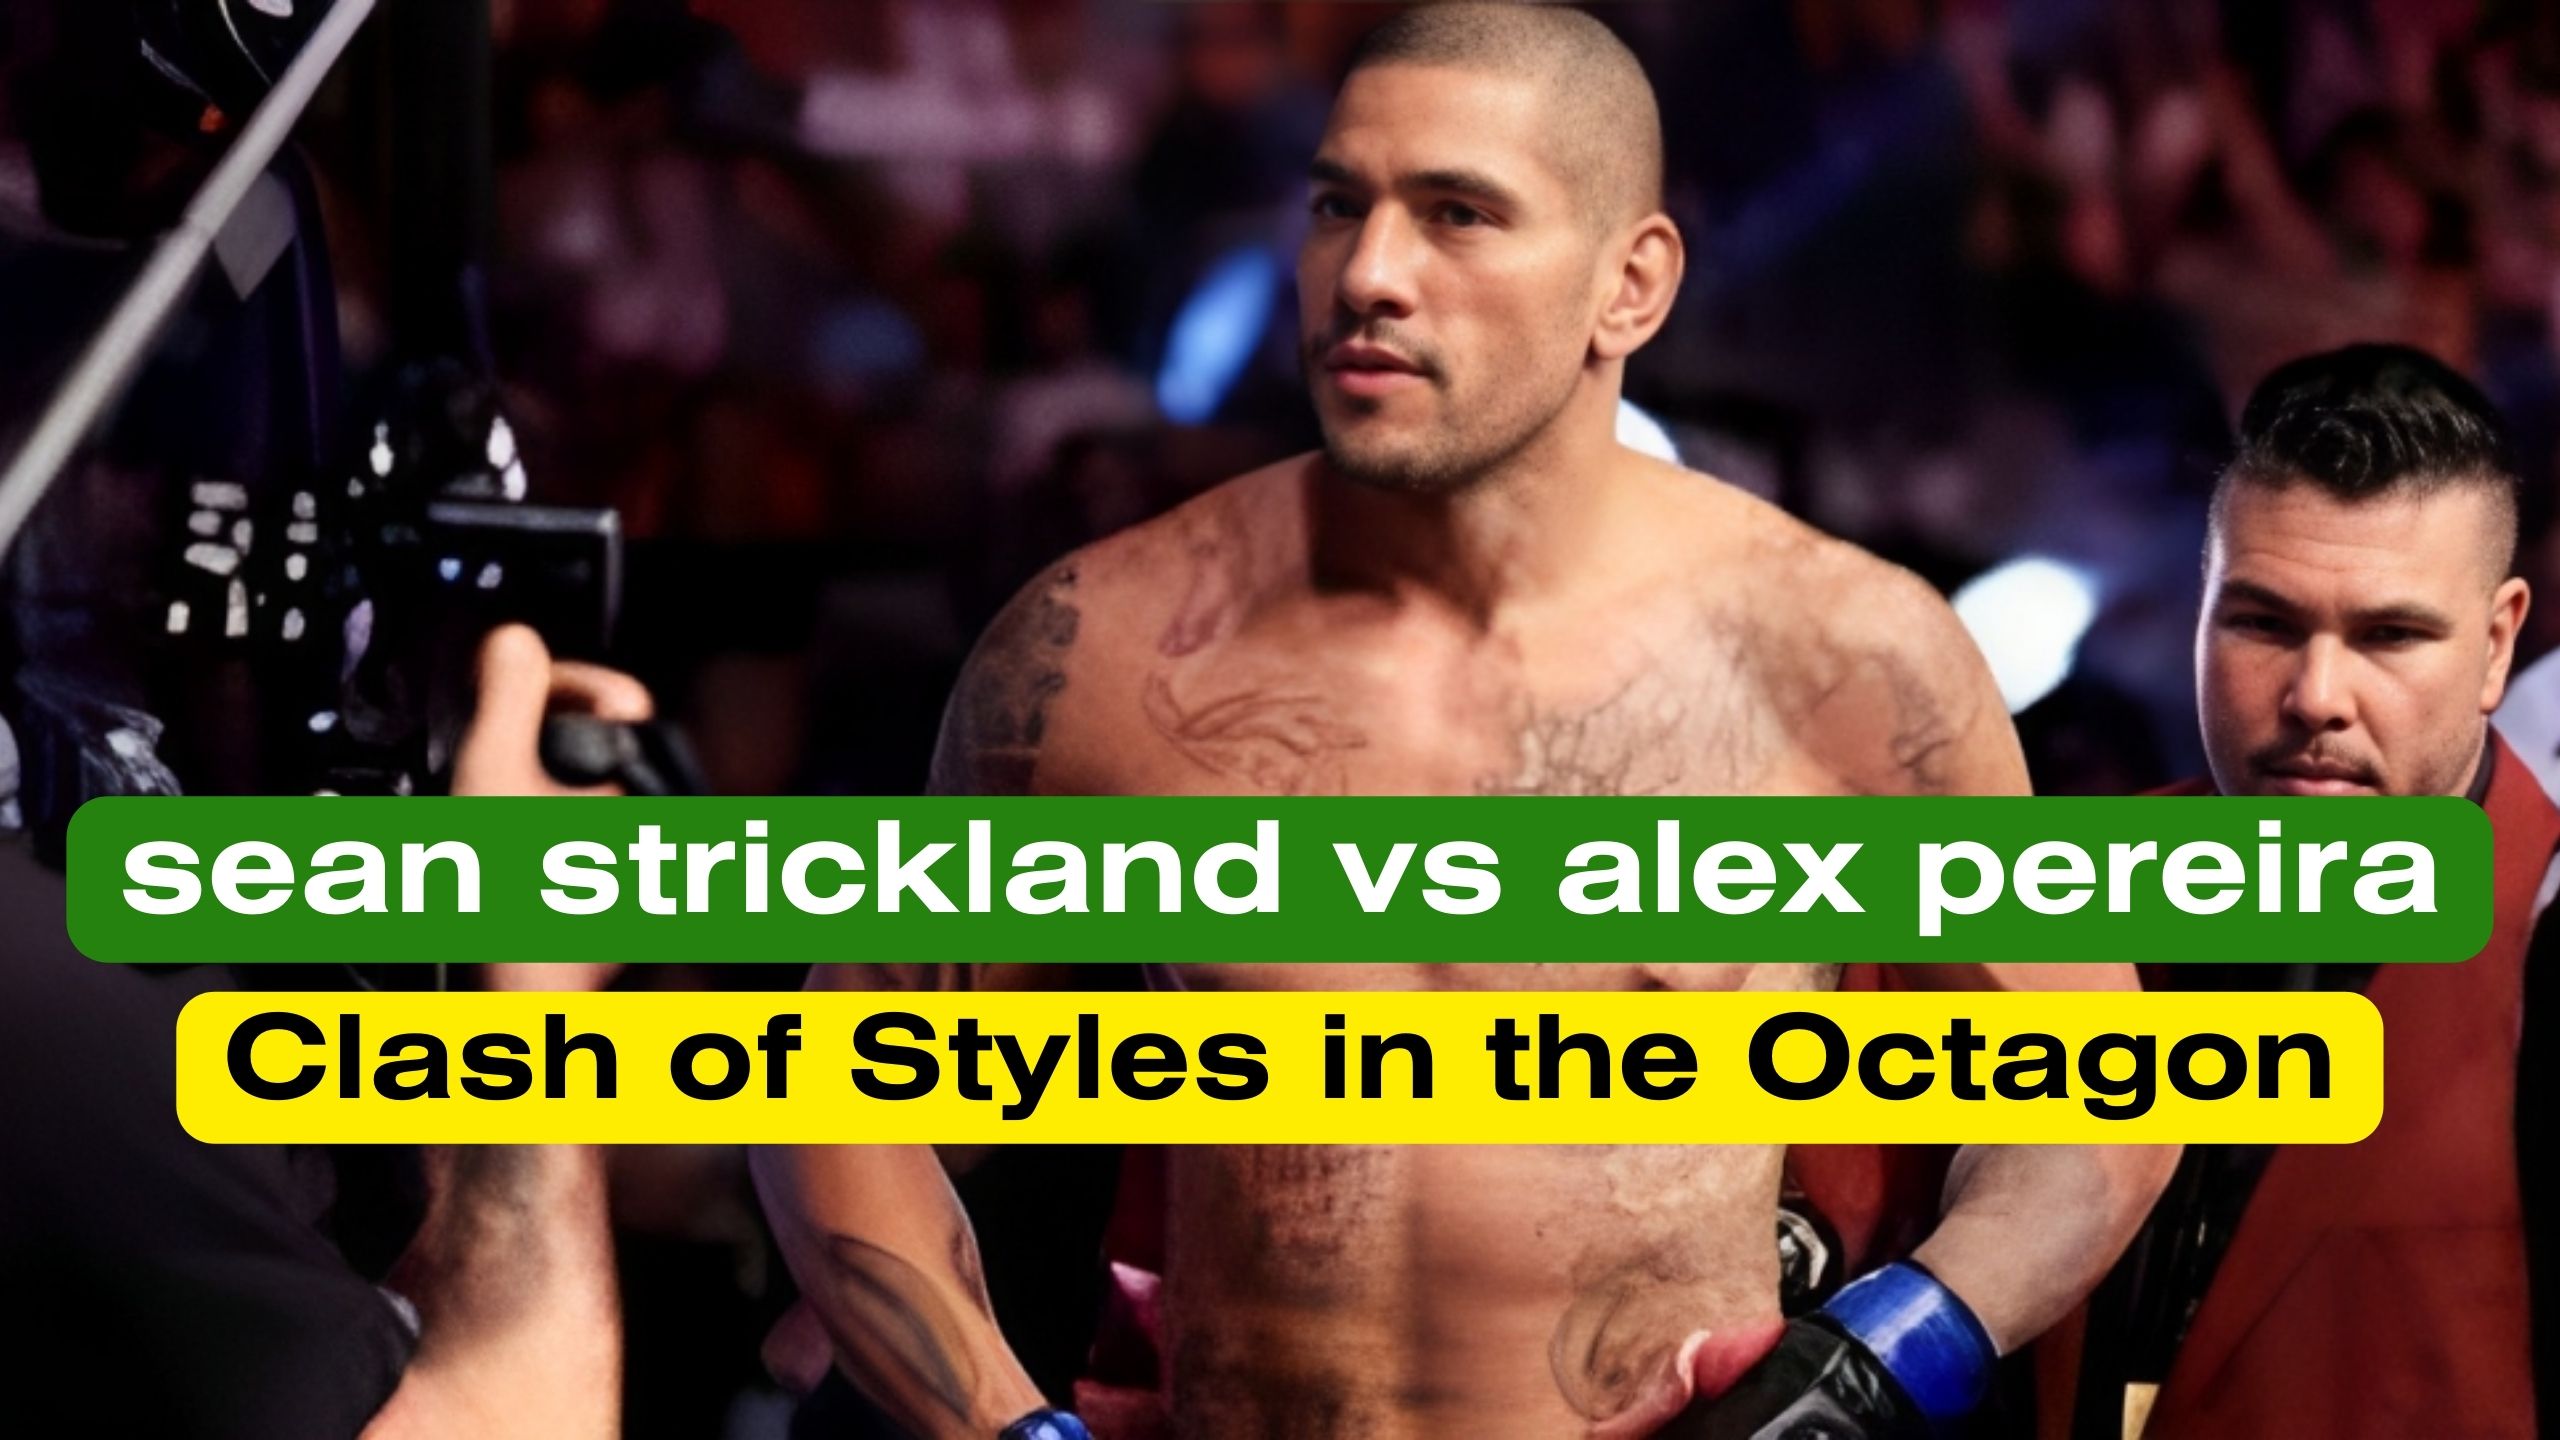 sean strickland vs alex pereira: Clash of Styles in the Octagon